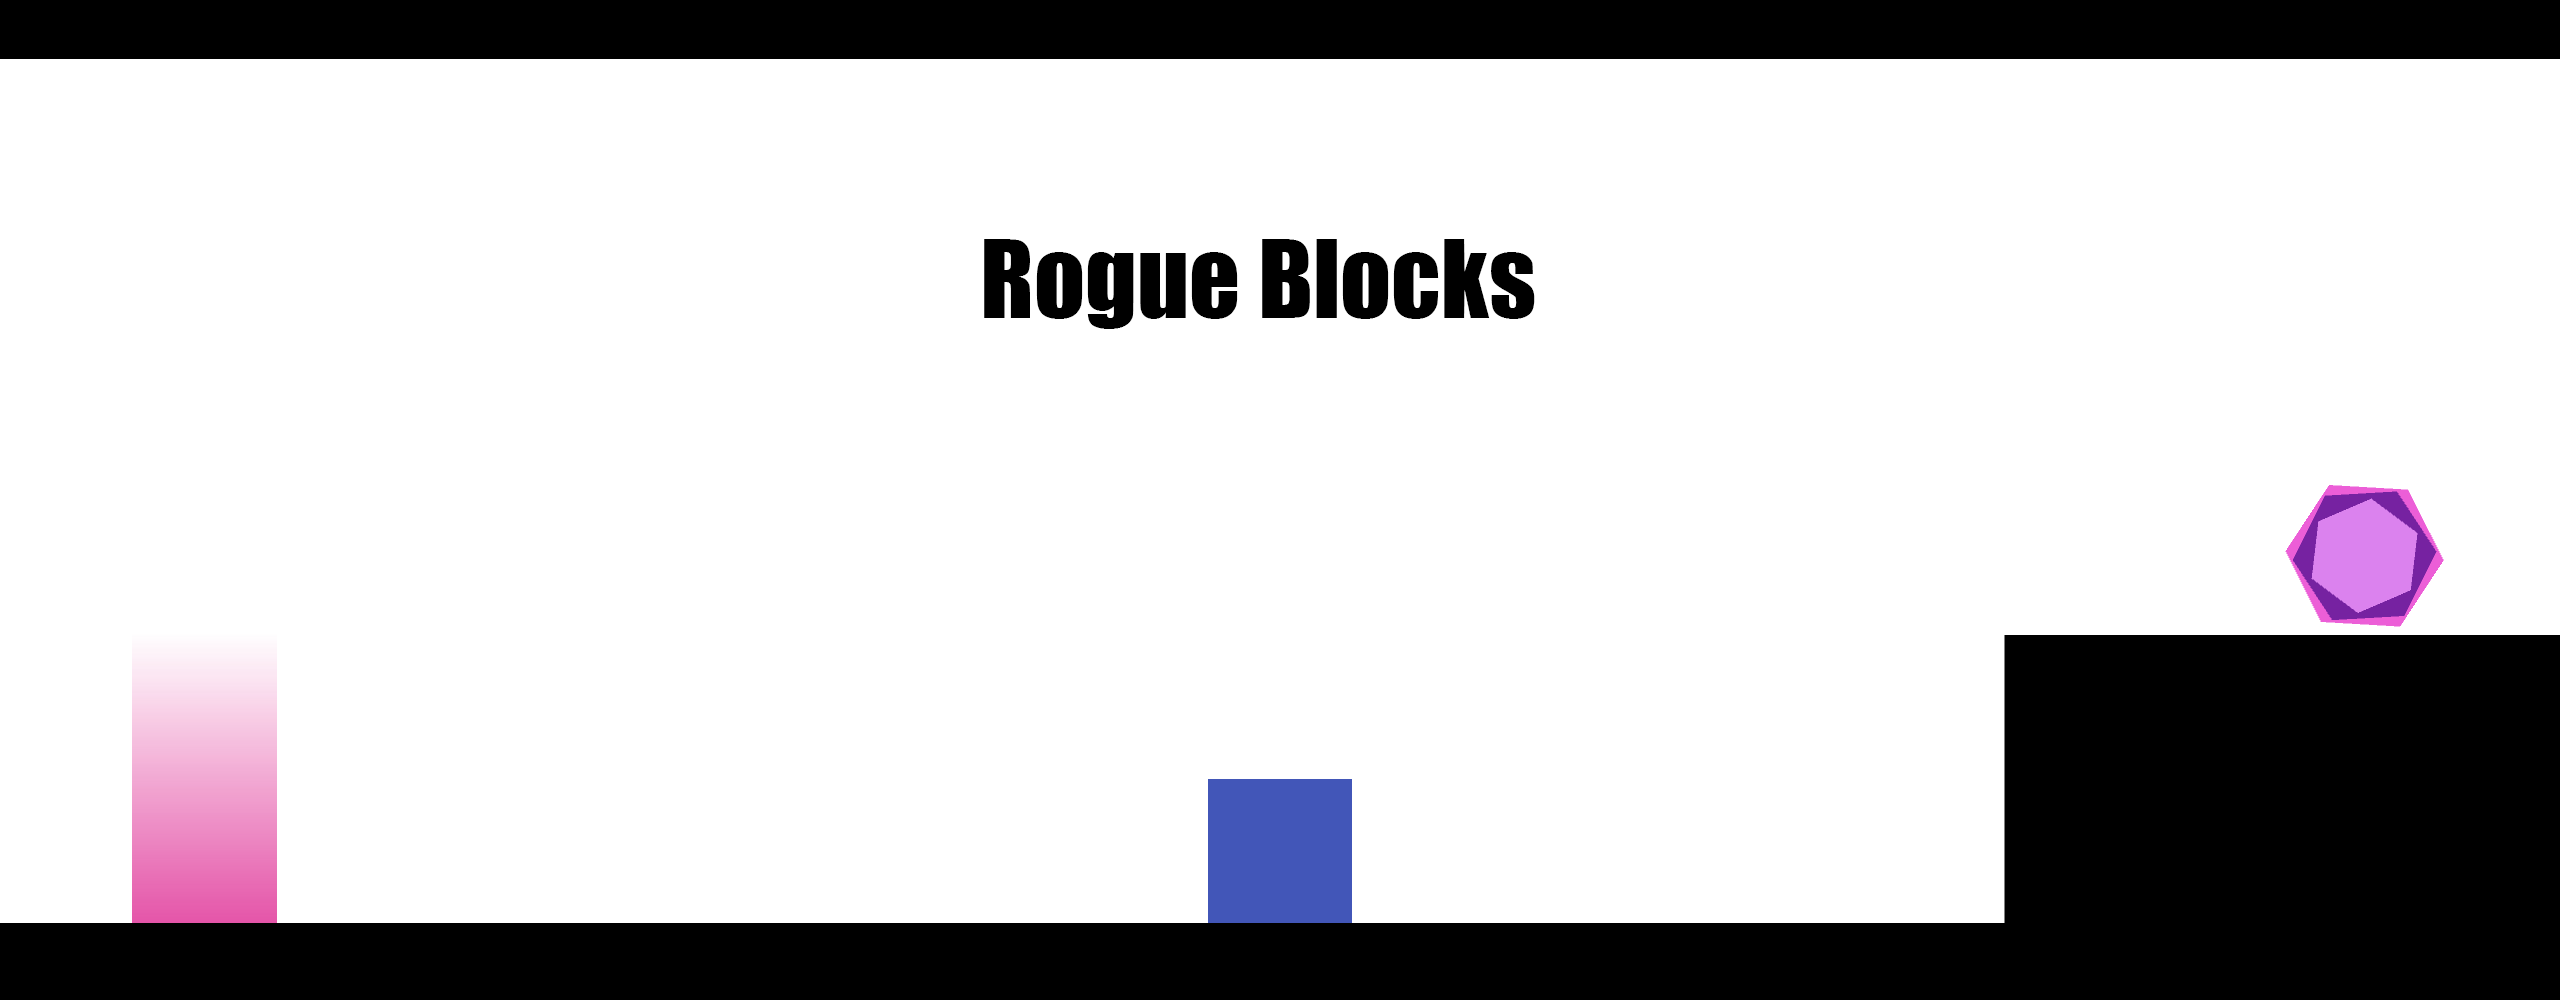 Rogue Blocks